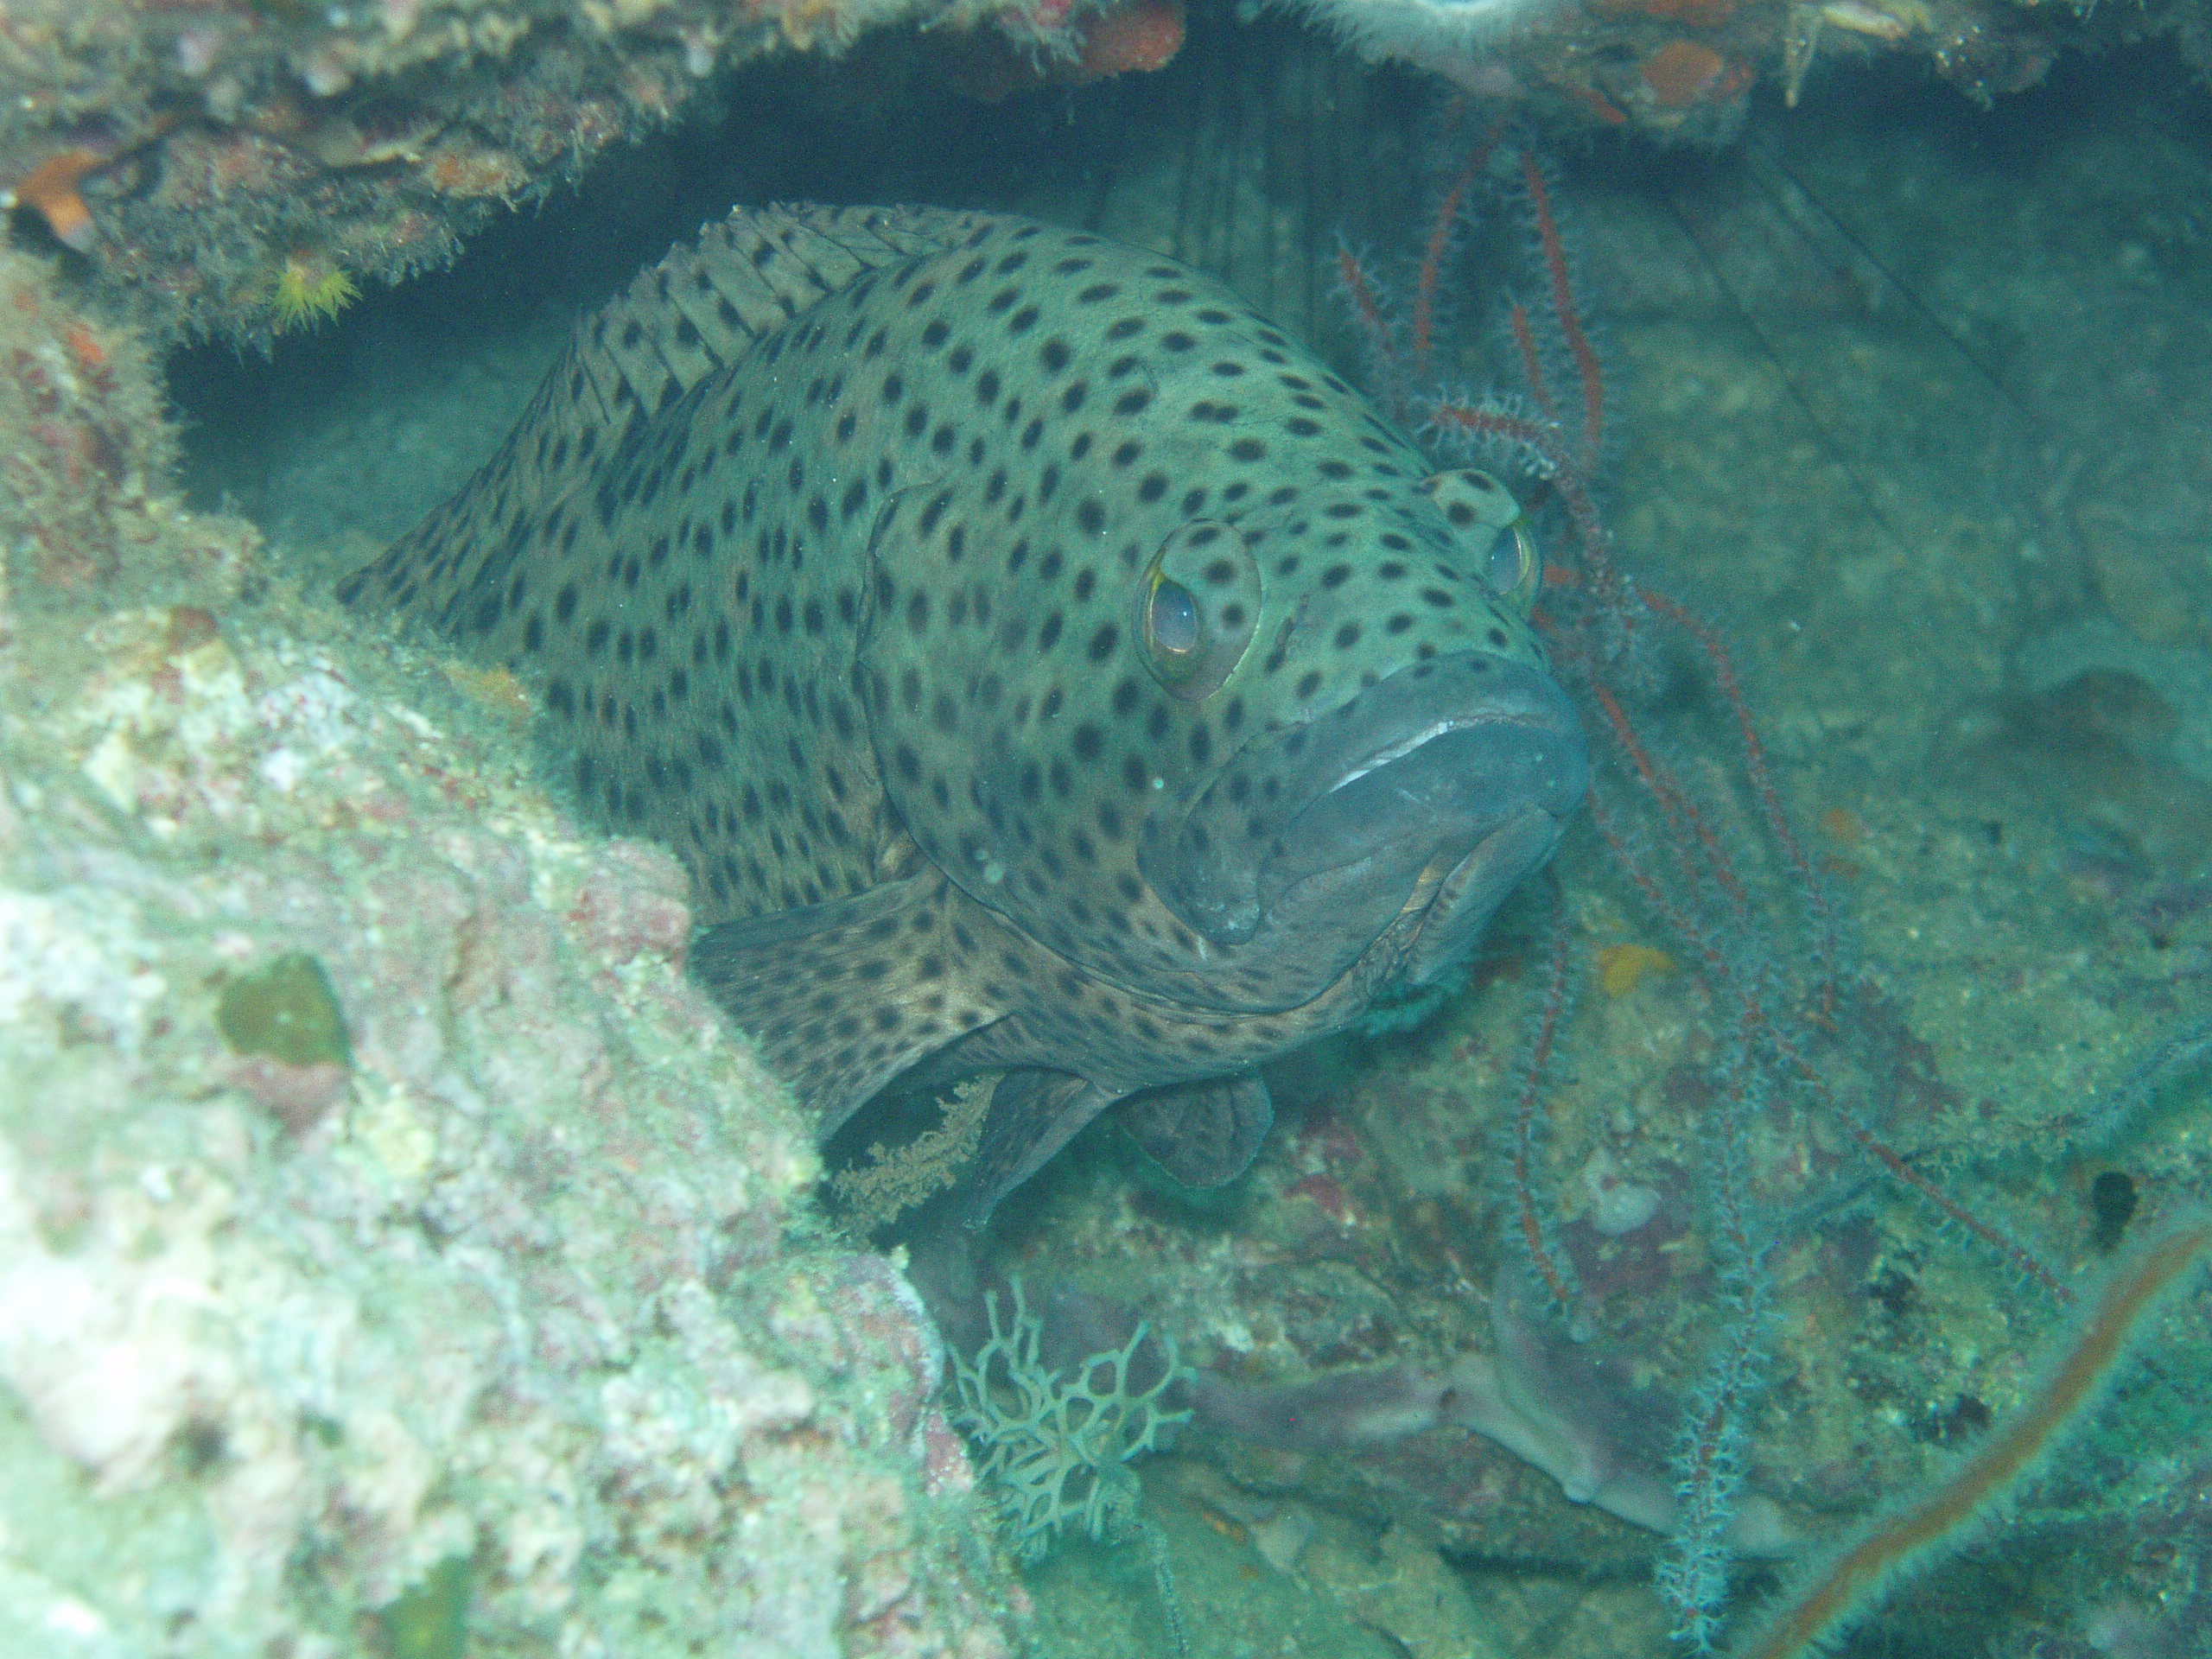 hexagon grouper